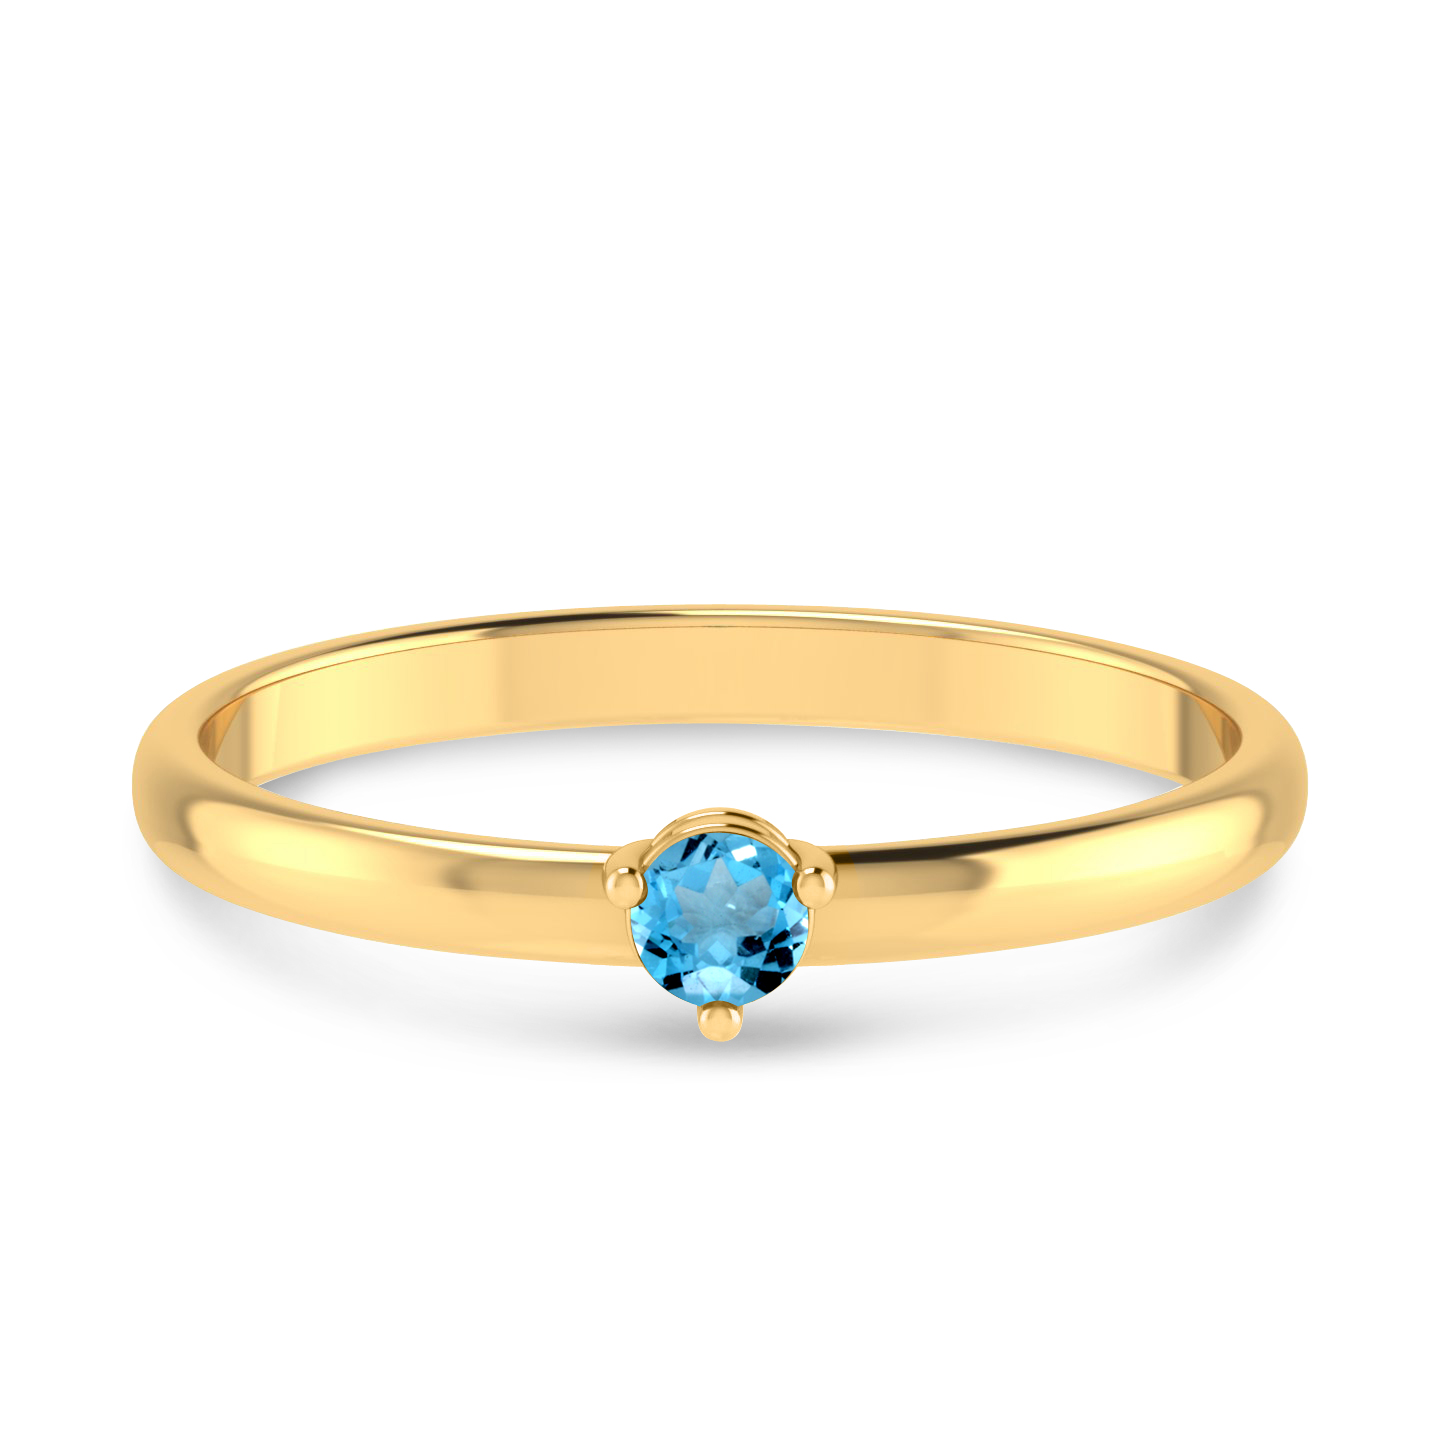 14K Yellow Gold 3mm Round Blue Topaz Birthstone Ring